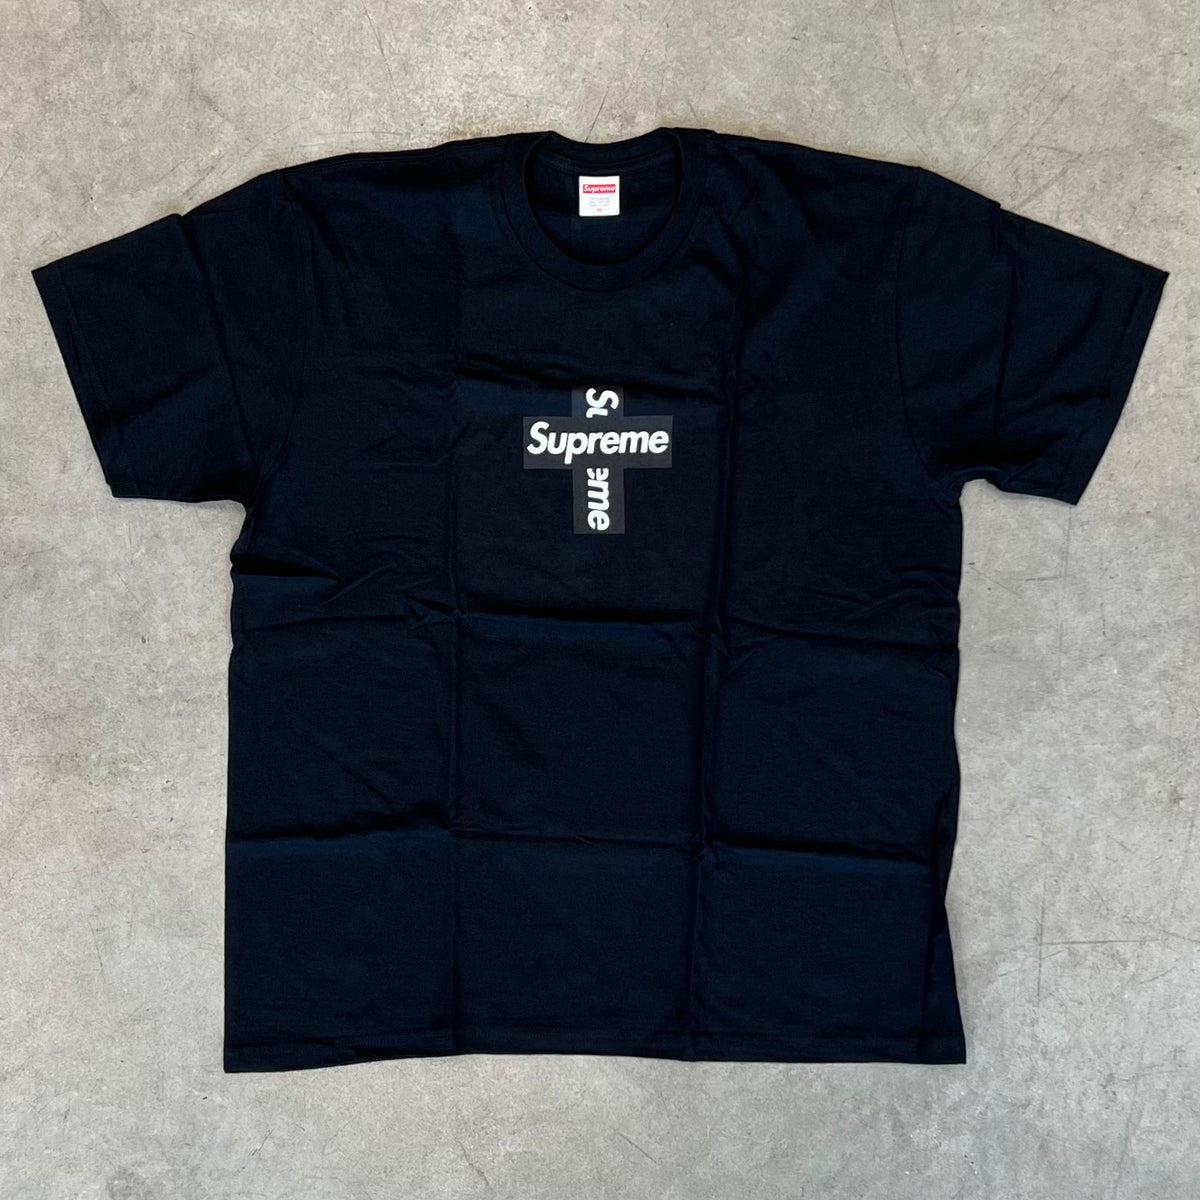 Supreme Cross Box Logo Hooded Sweatshirt 'Black' | Black | Men's Size 105